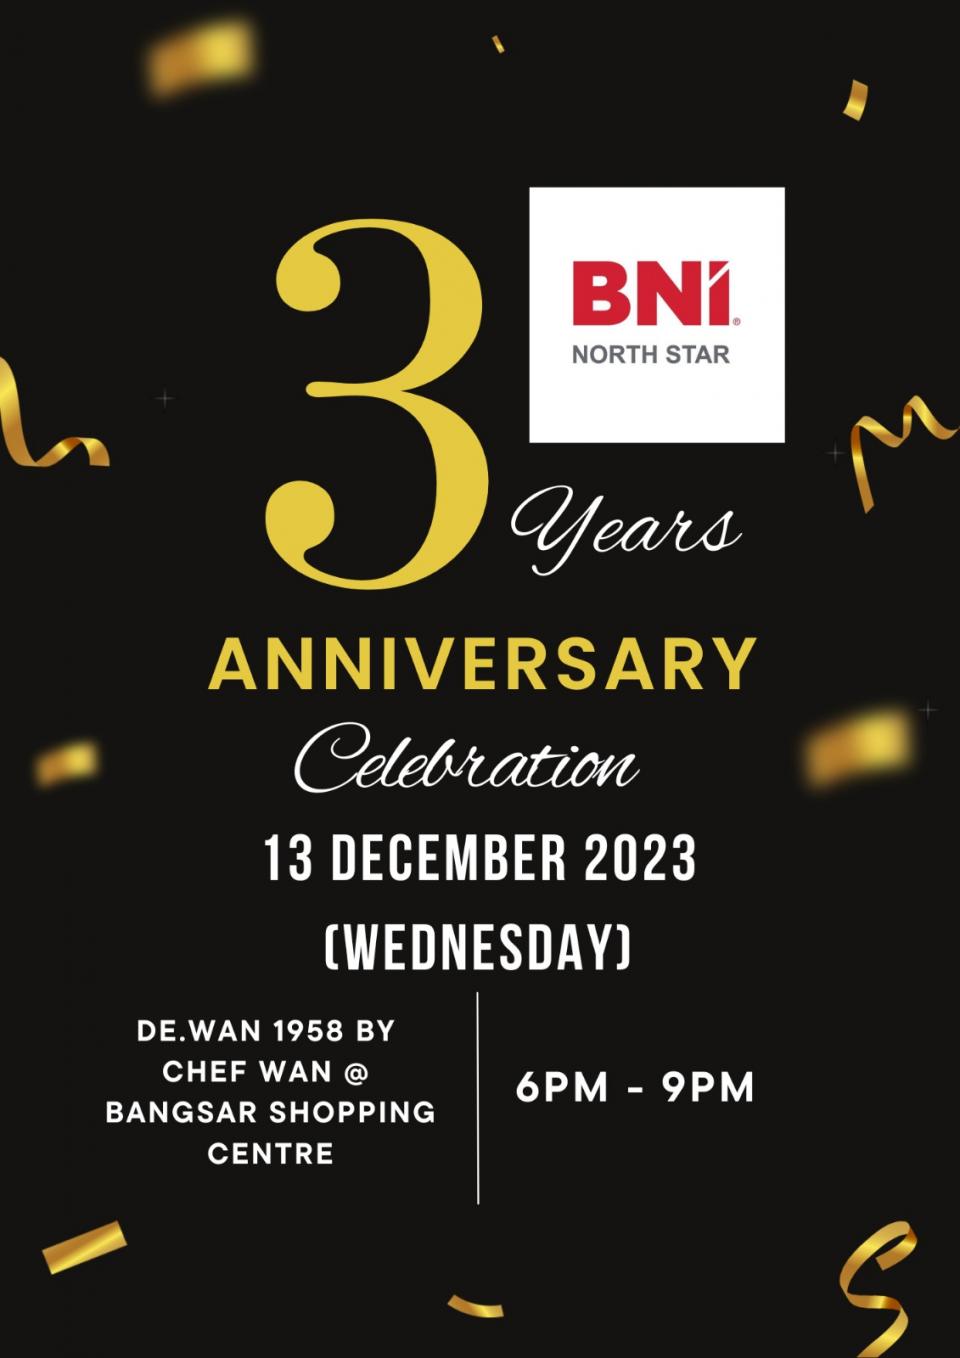 BNI North Star 3 Years Anniversary Celebration Cover